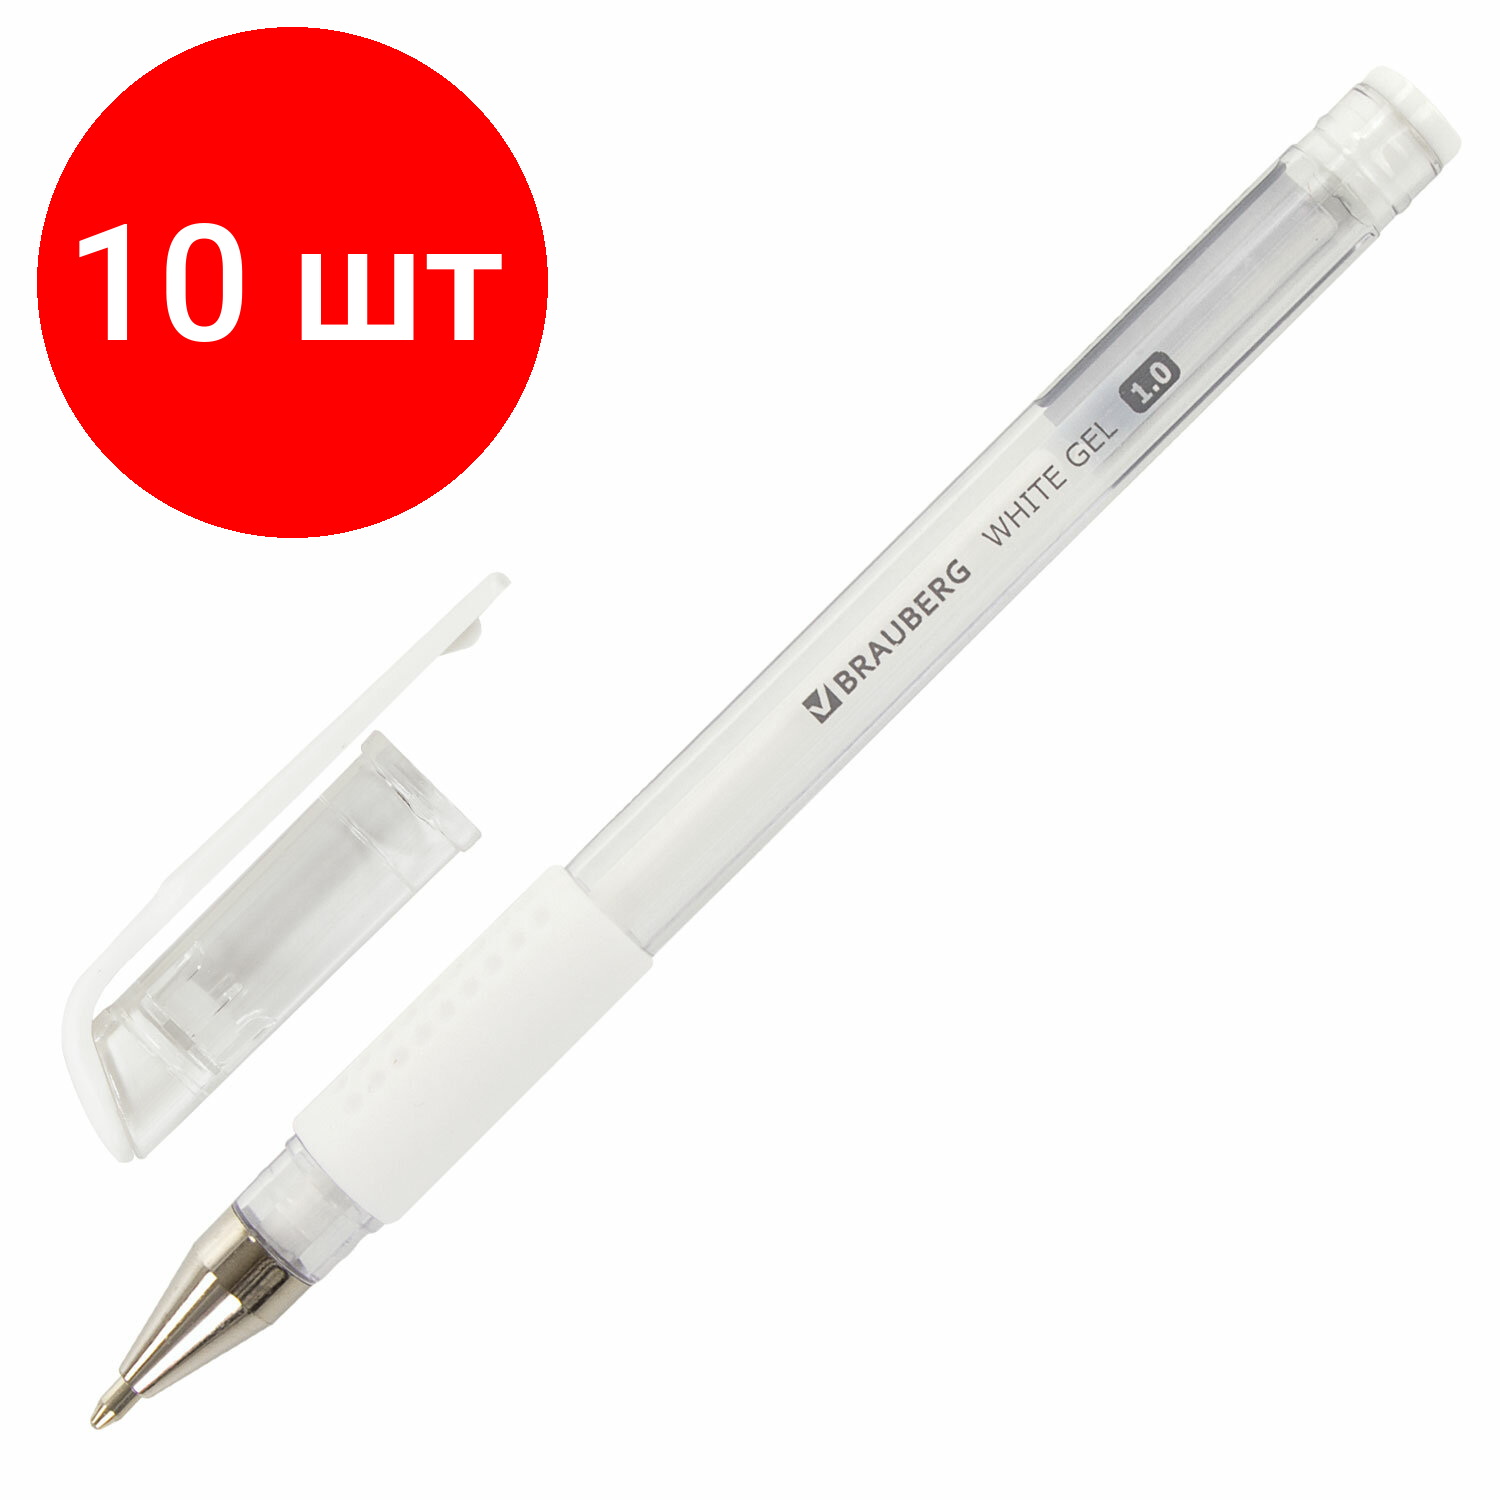 Комплект 10 шт, Ручка гелевая с грипом BRAUBERG "White", БЕЛАЯ, пишущий узел 1 мм, линия письма 0.5 мм, 143416